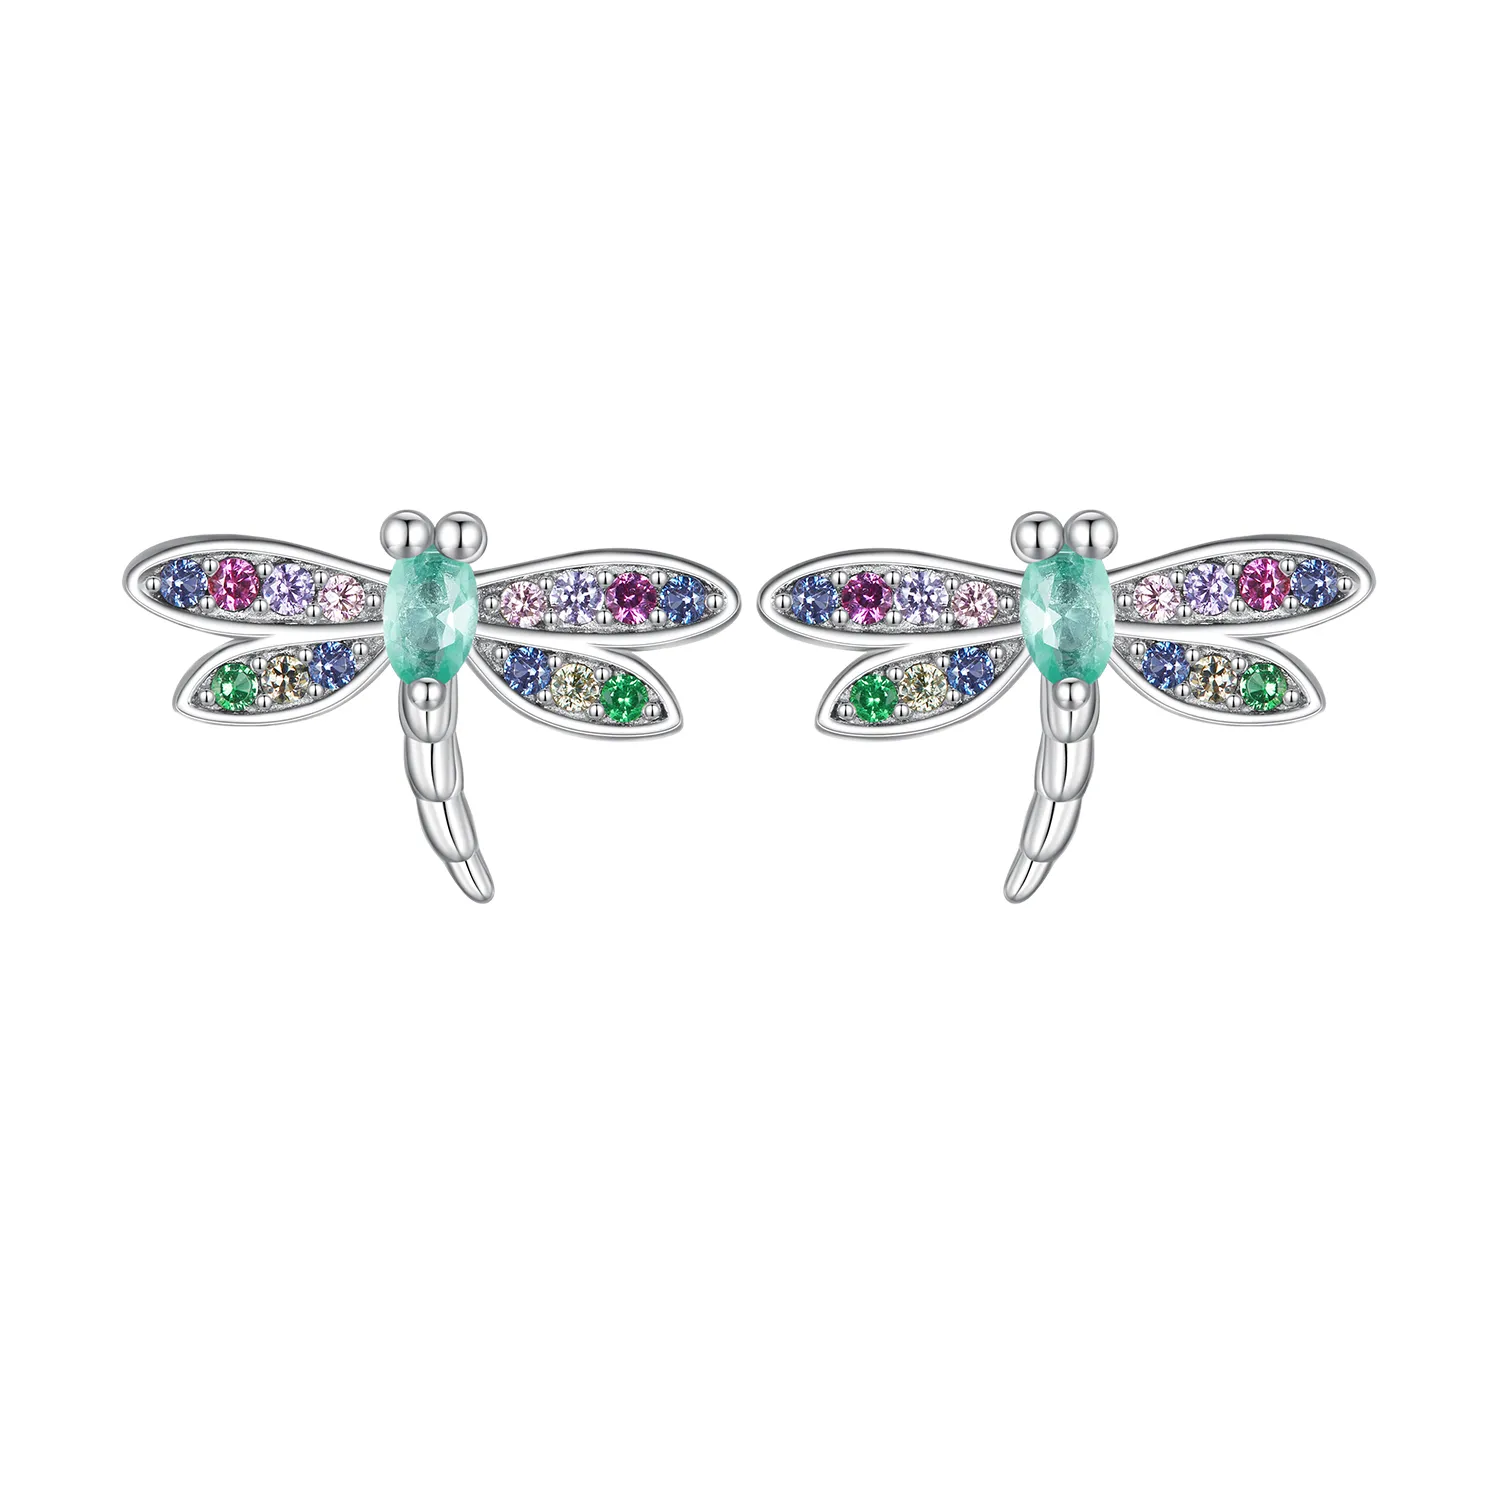 Studuri cercei Dragonfly în stil Pandora - BSE795